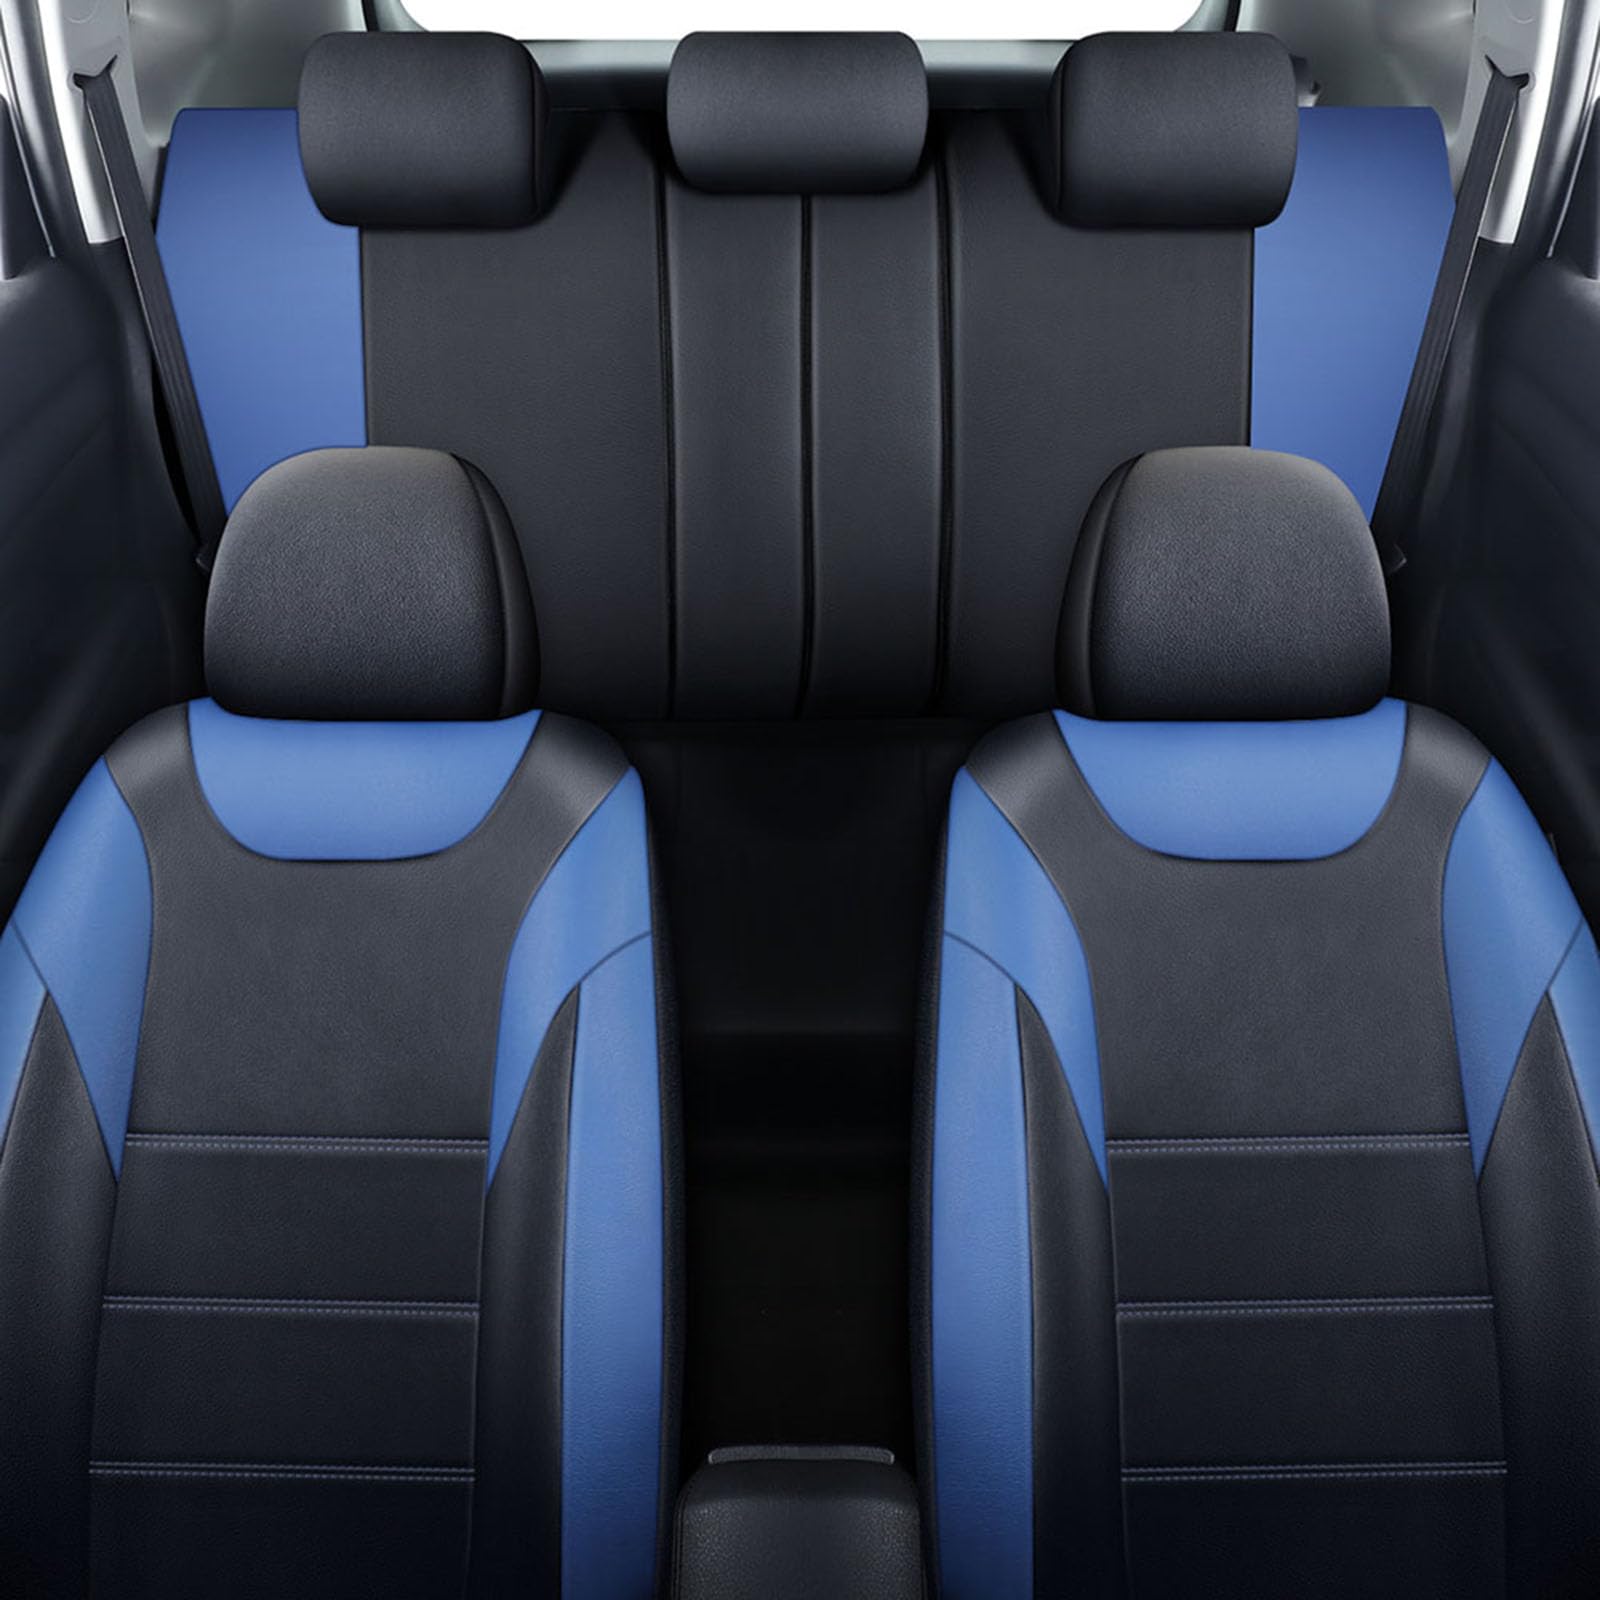 Chifeng Universal pu Leder Auto Sitzbezug Set Vordere Reihe Rücksitz Schutzabdeckungen Auto Interieur Zubehör für Audi A1 8X1 8XK A3 8p 8v 8l Sportback A4 8K2 B8 b6 b7 b8 A6 Q3 Q5 Q7 SQ5 von Chifeng